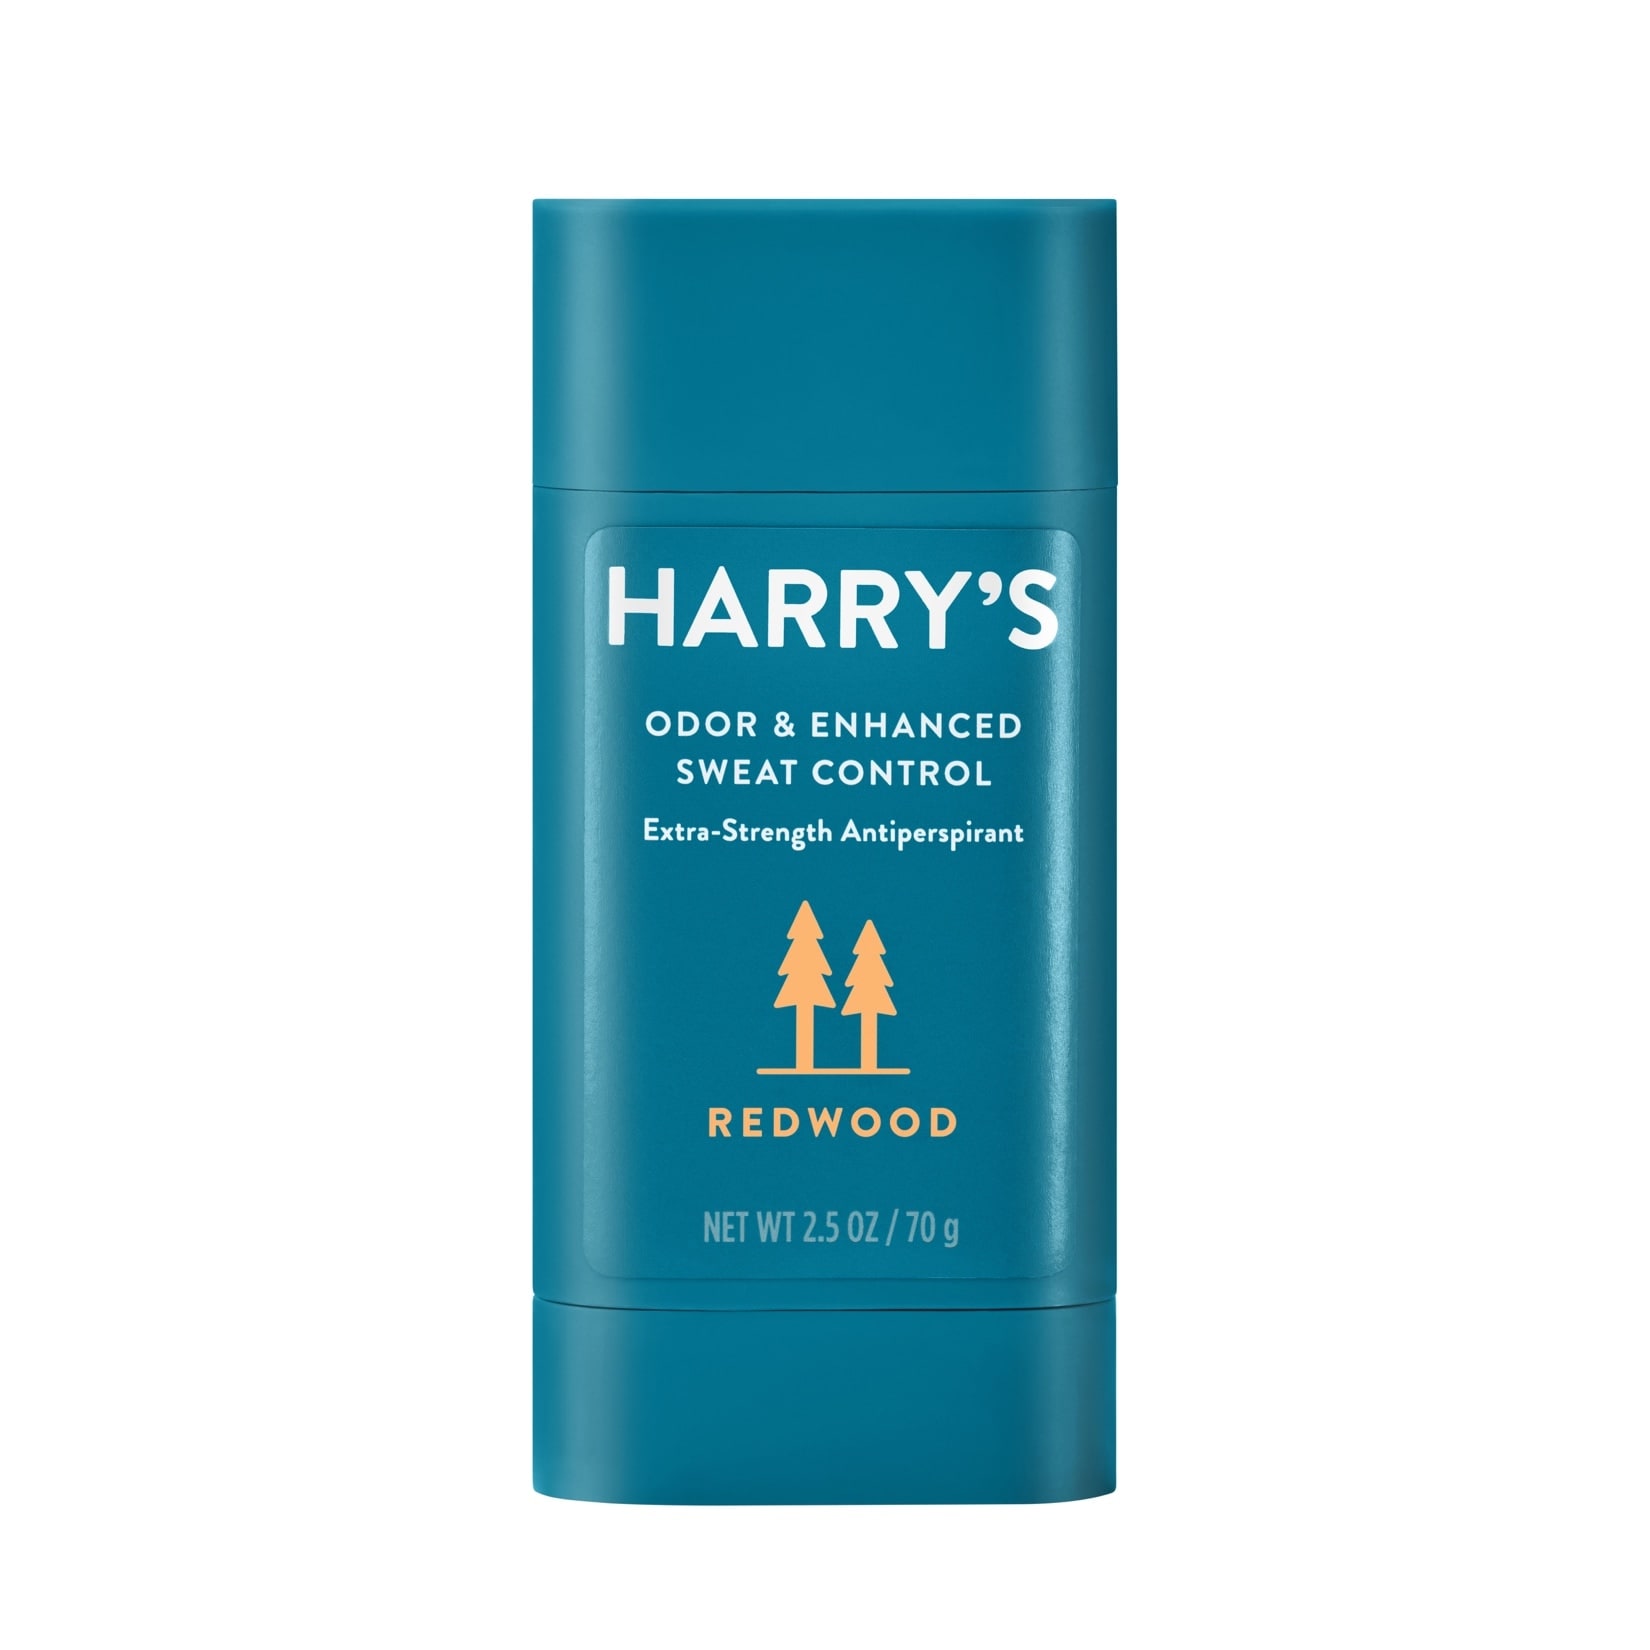 Harry's Odor & Enhanced Sweat Control Extra Strength Antiperspirant Stick, Redwood, 2.5 OZ